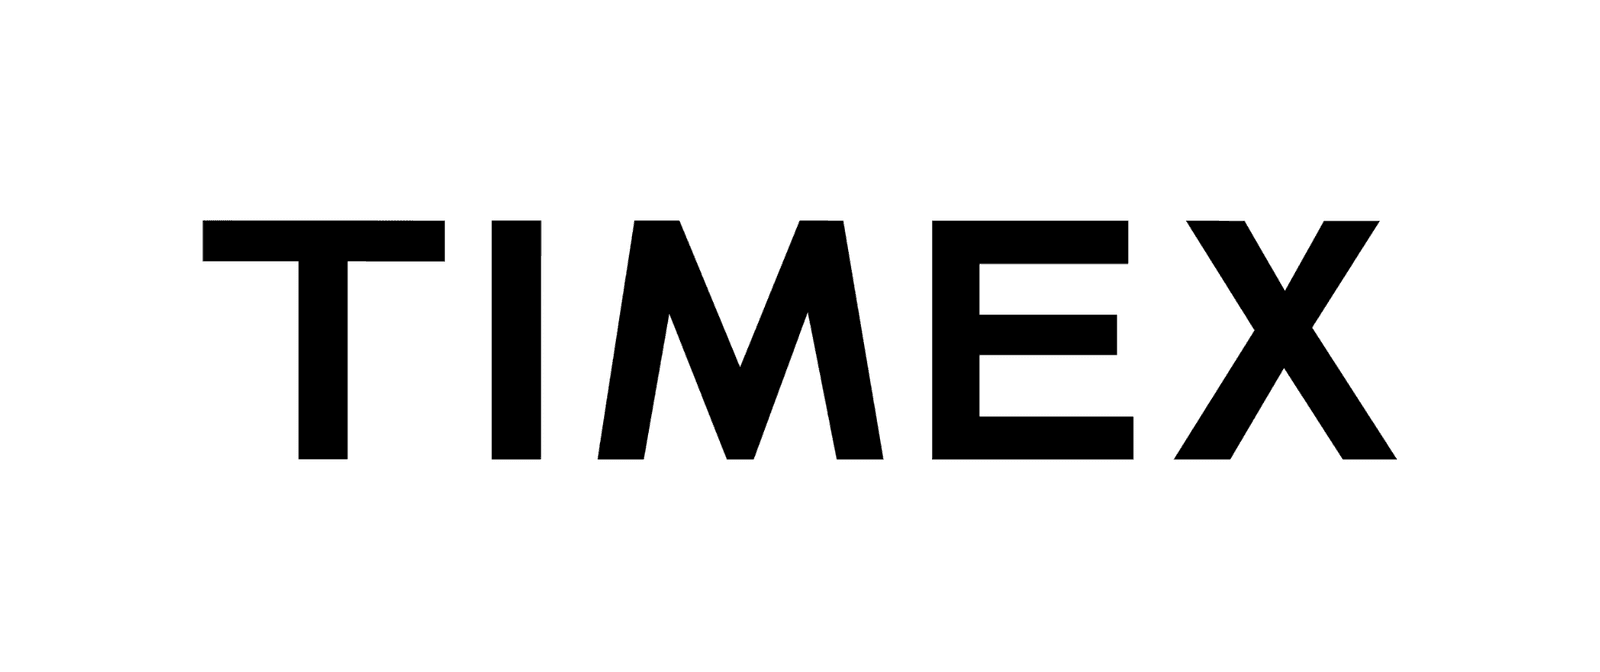 THM - Timex Header